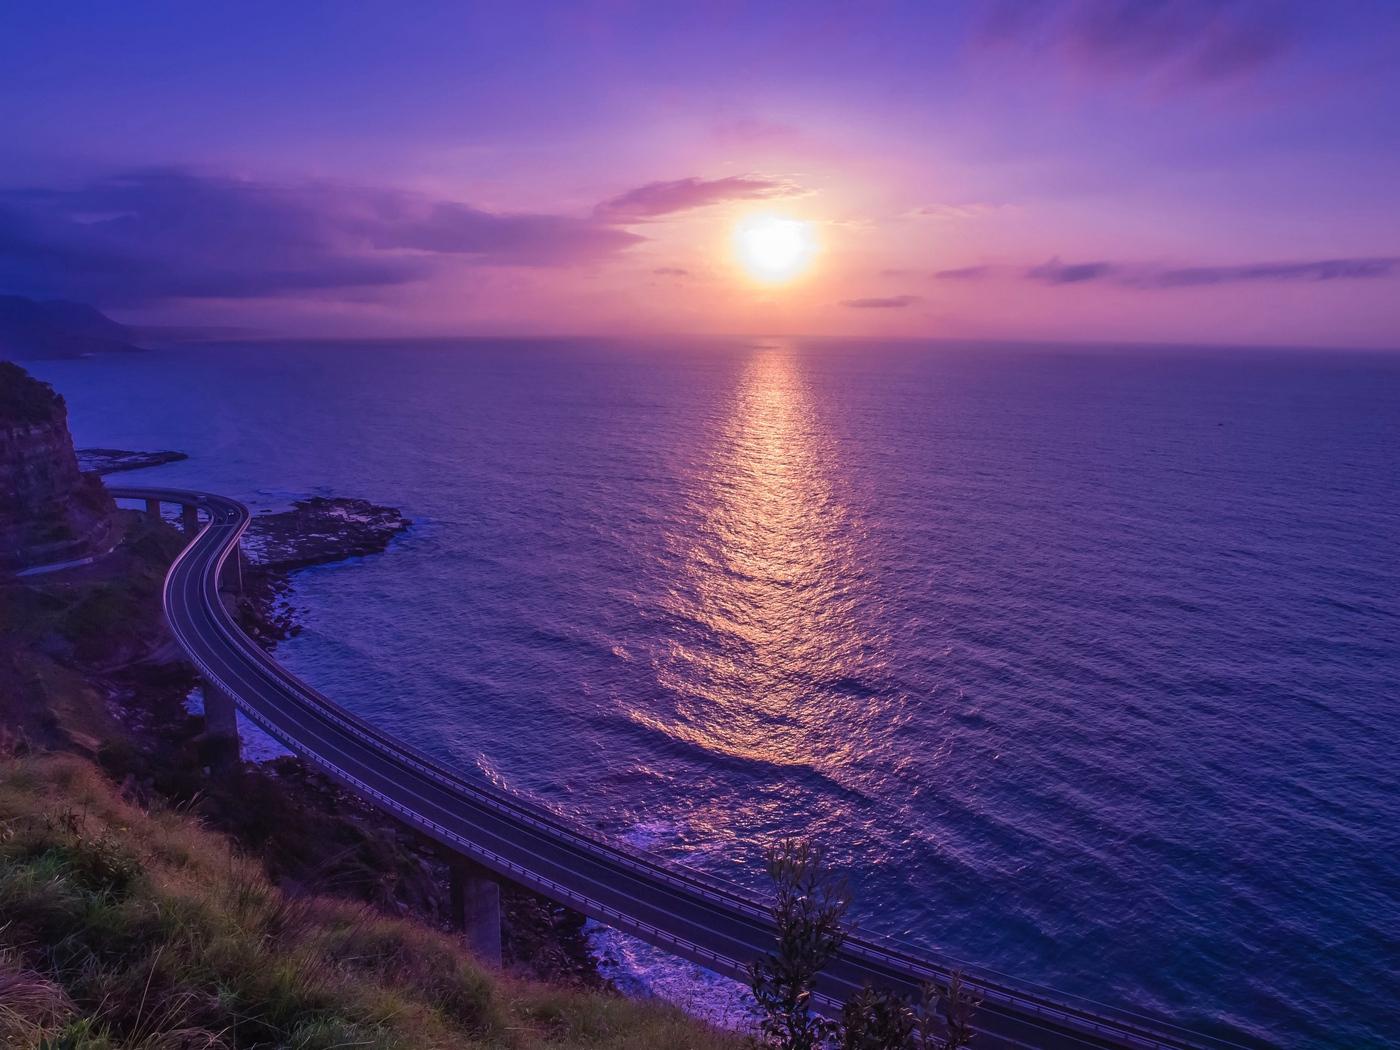 Download wallpaper 1400x1050 sea, sunset, bridge, horizon, purple